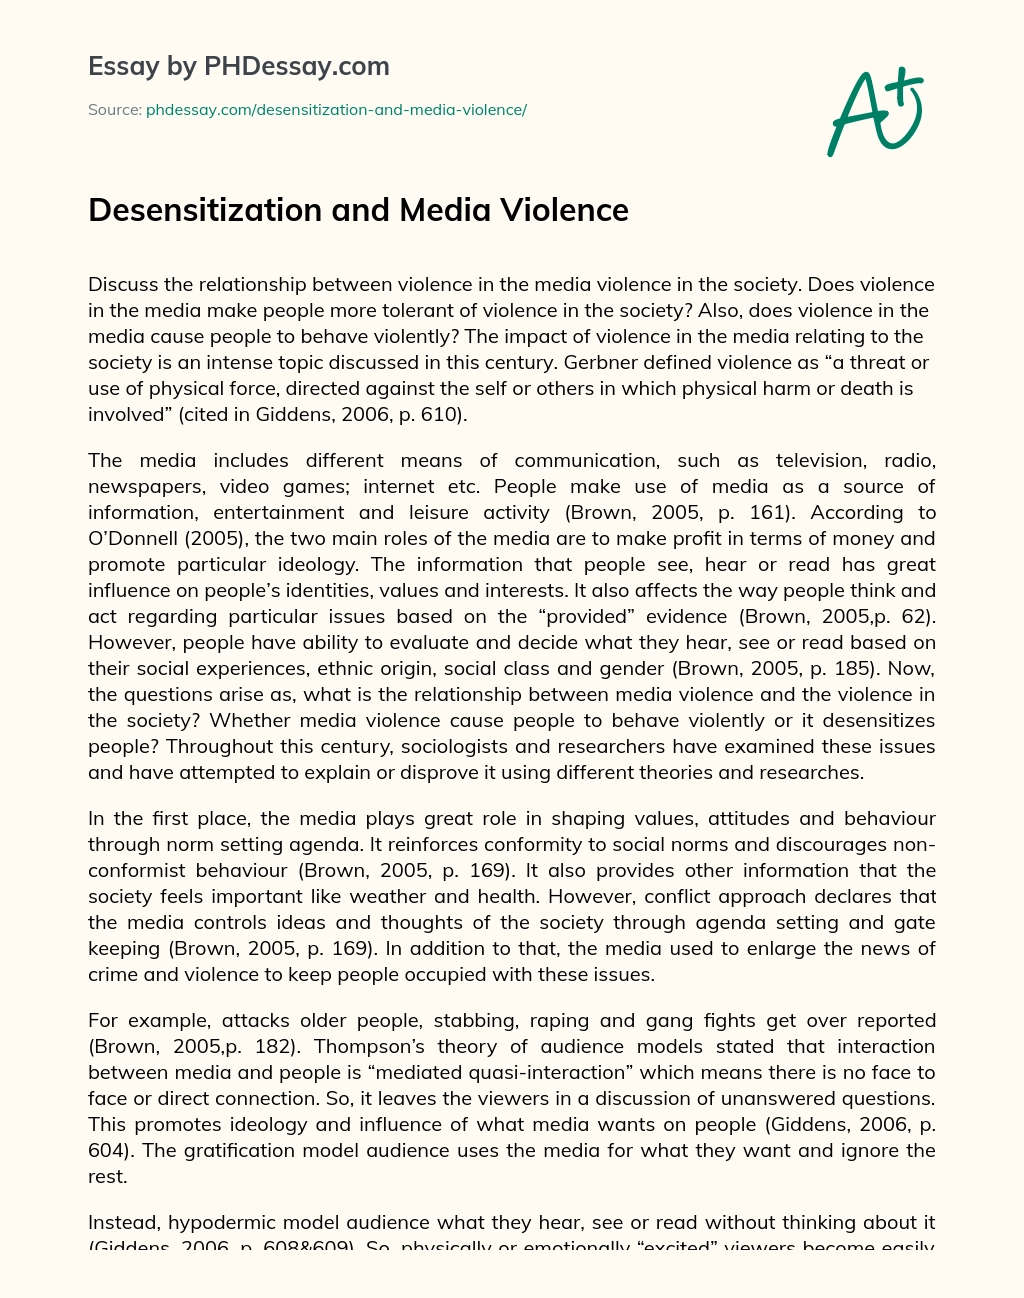 Desensitization and Media Violence essay